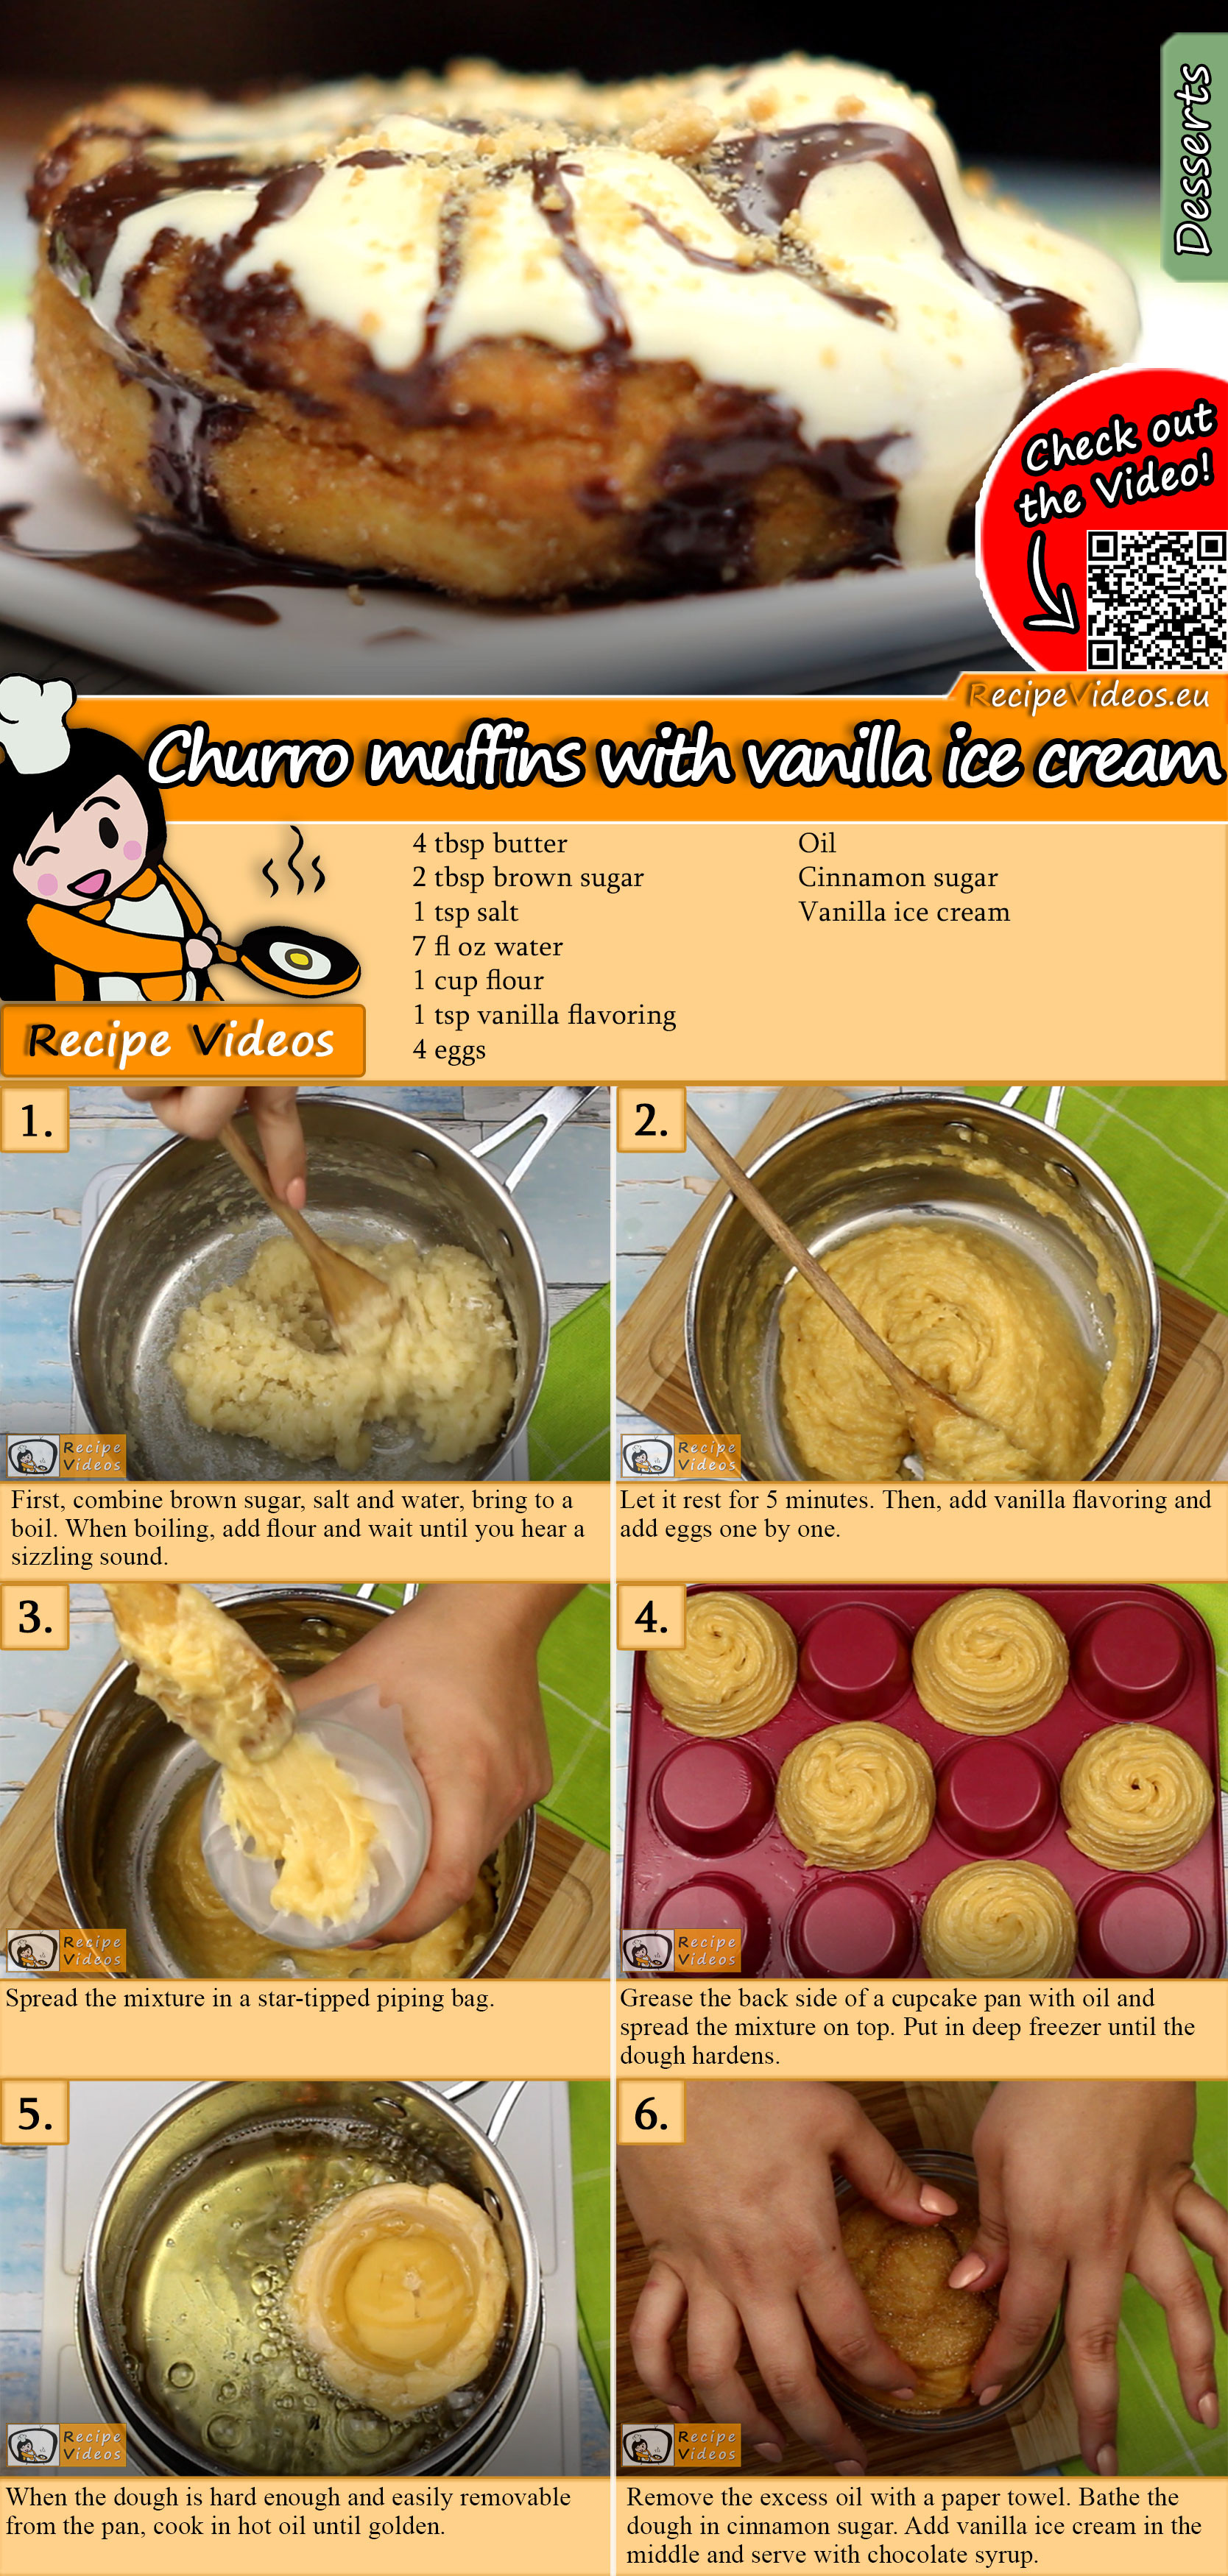 Churro muffins with vanilla ice cream recipe with video